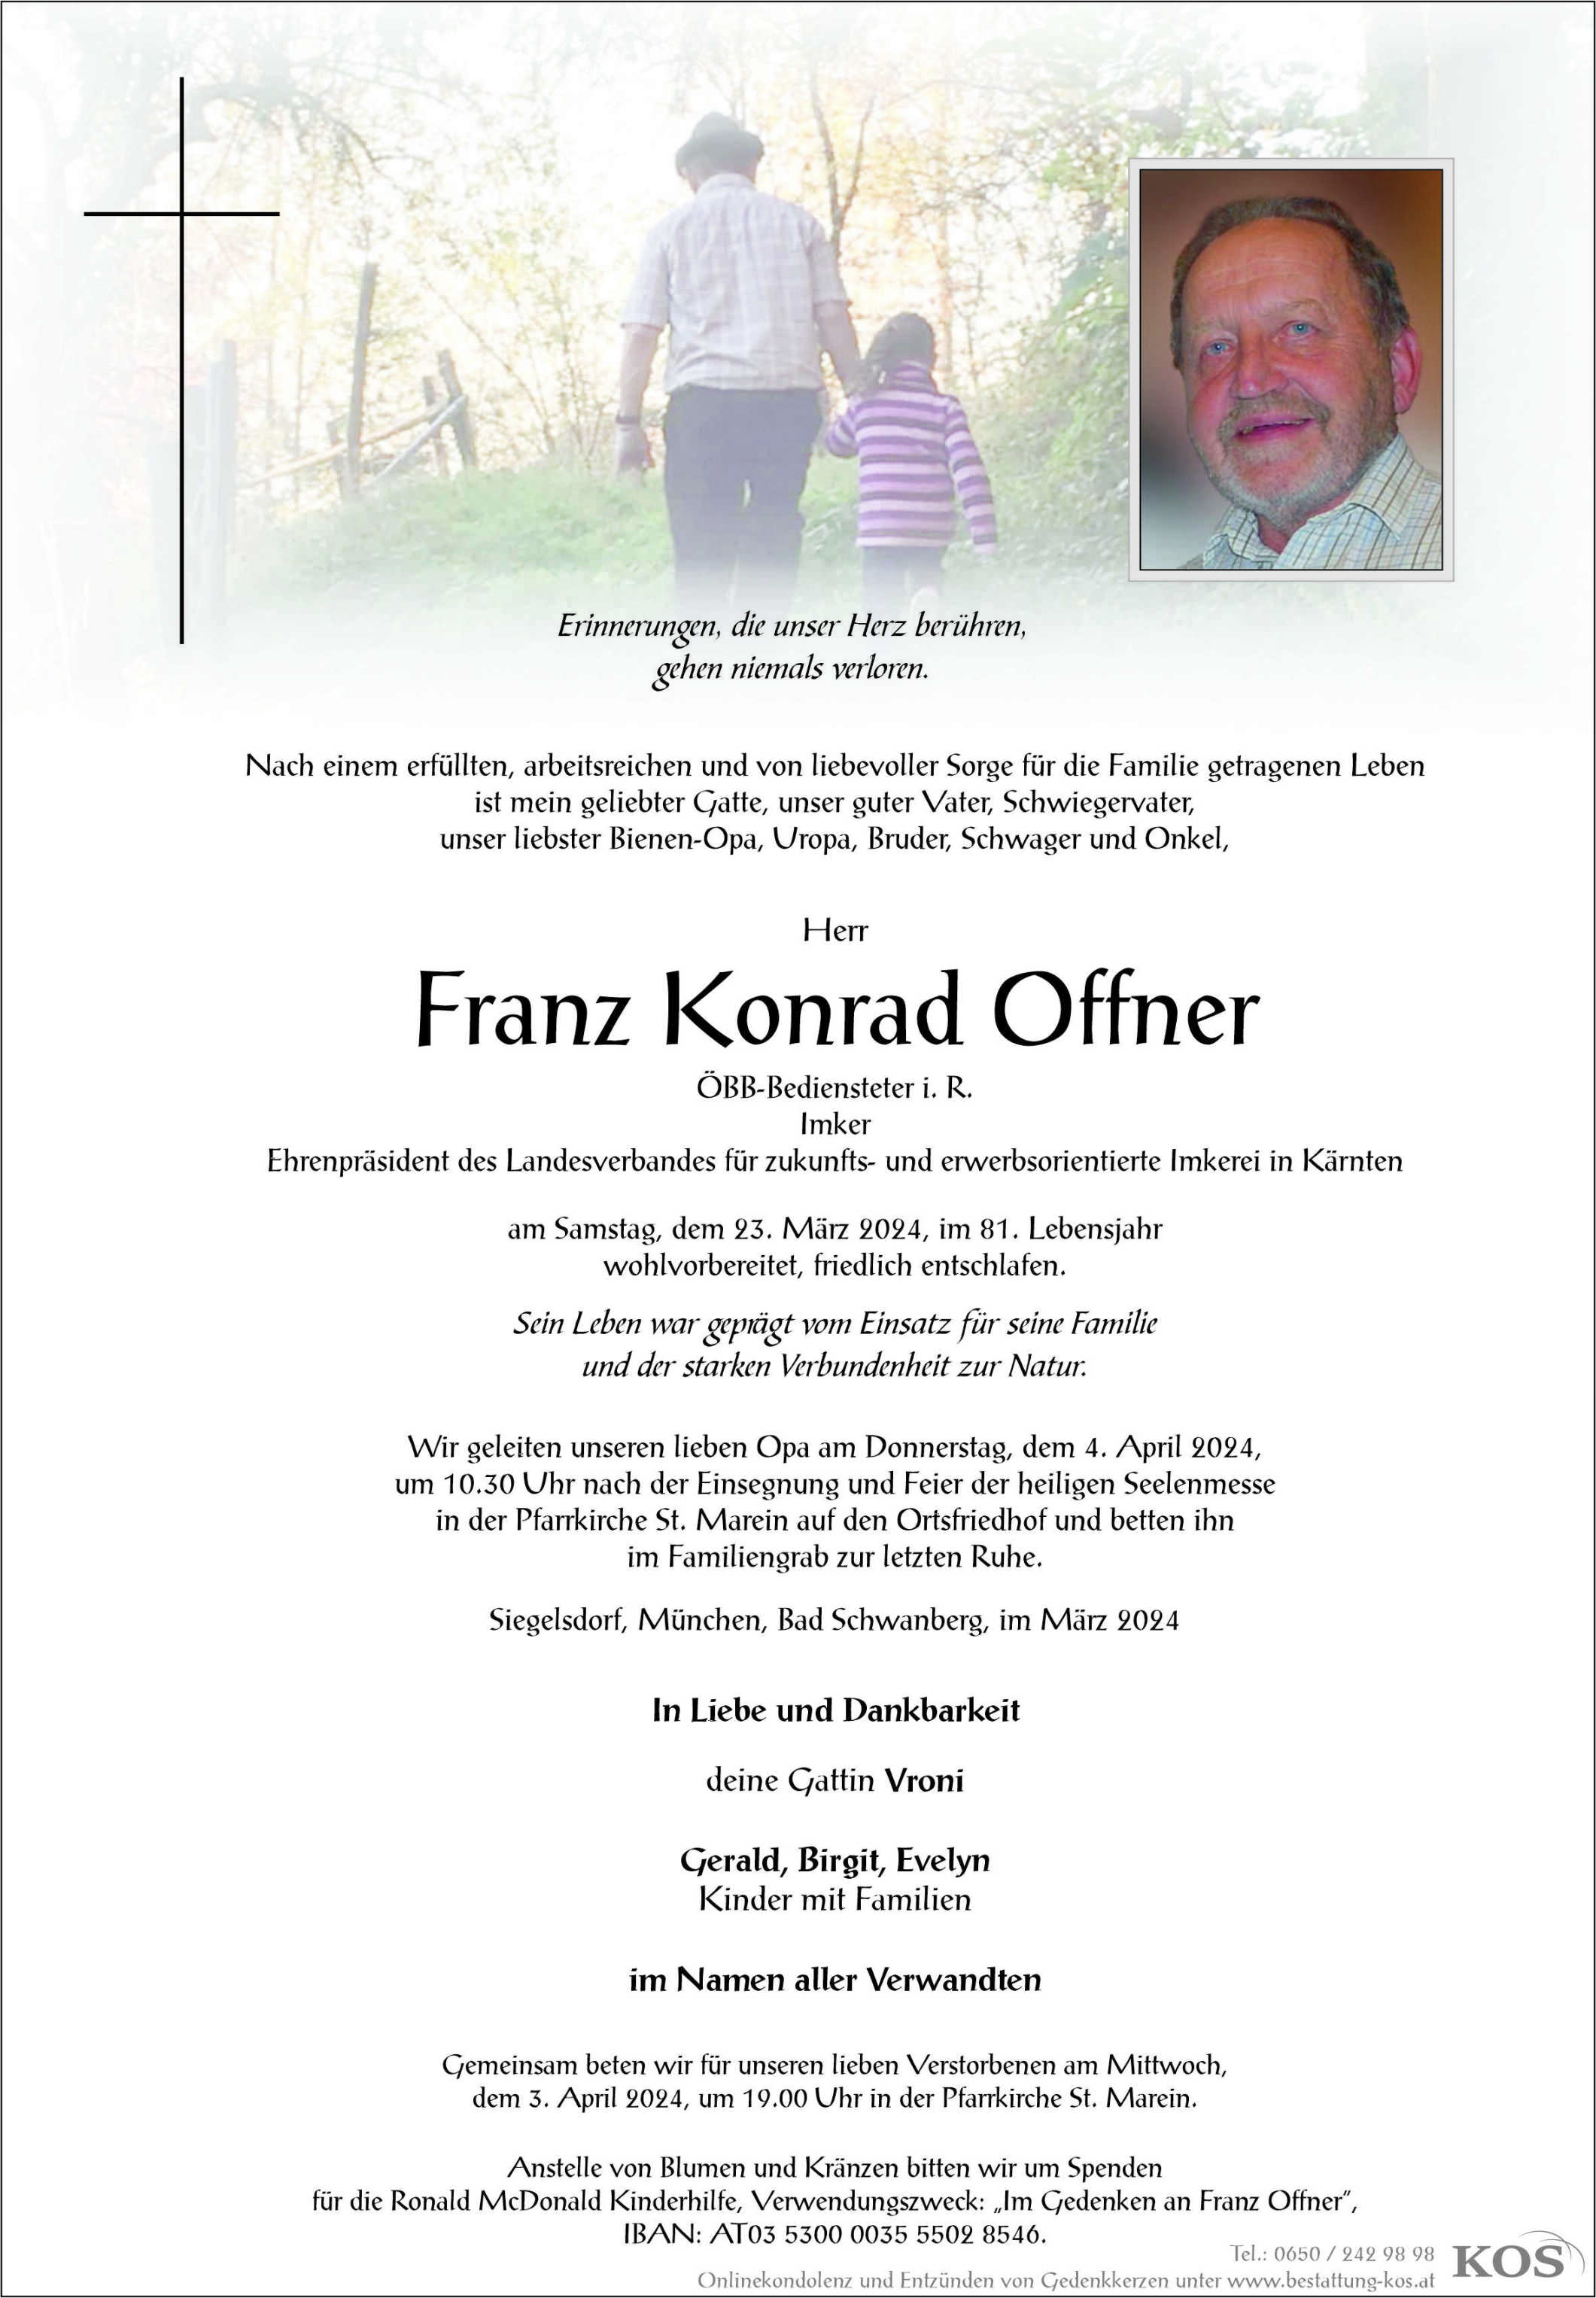 Franz Konrad Offner